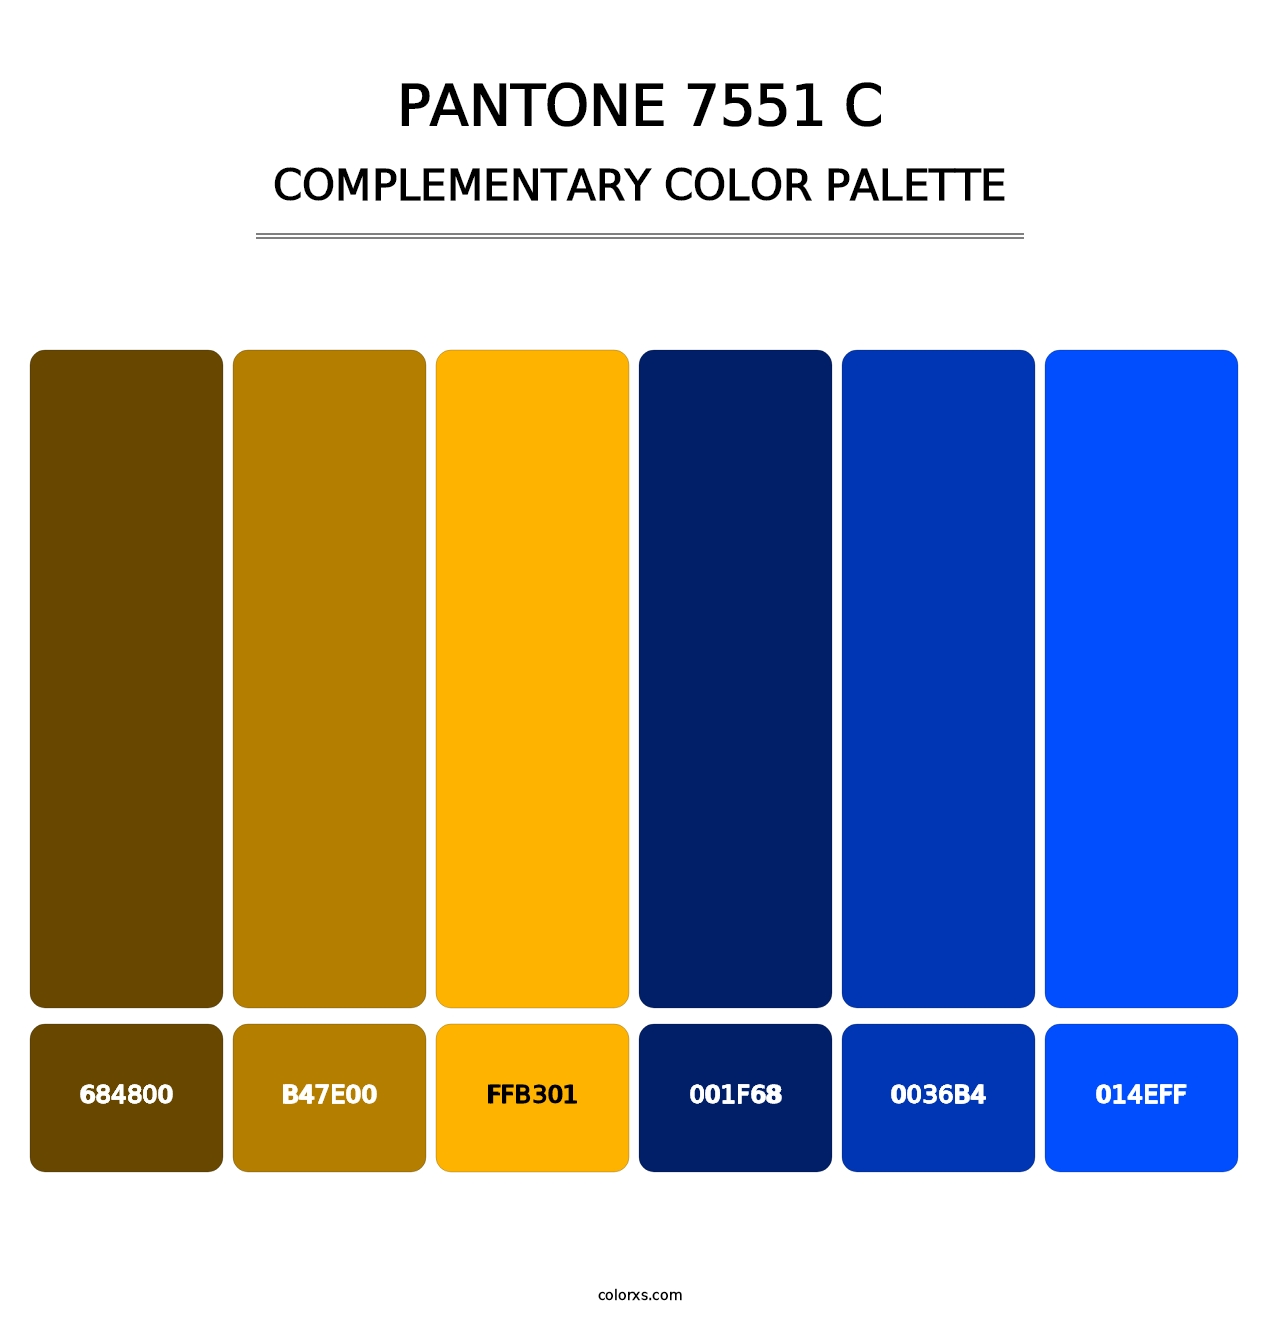 PANTONE 7551 C - Complementary Color Palette